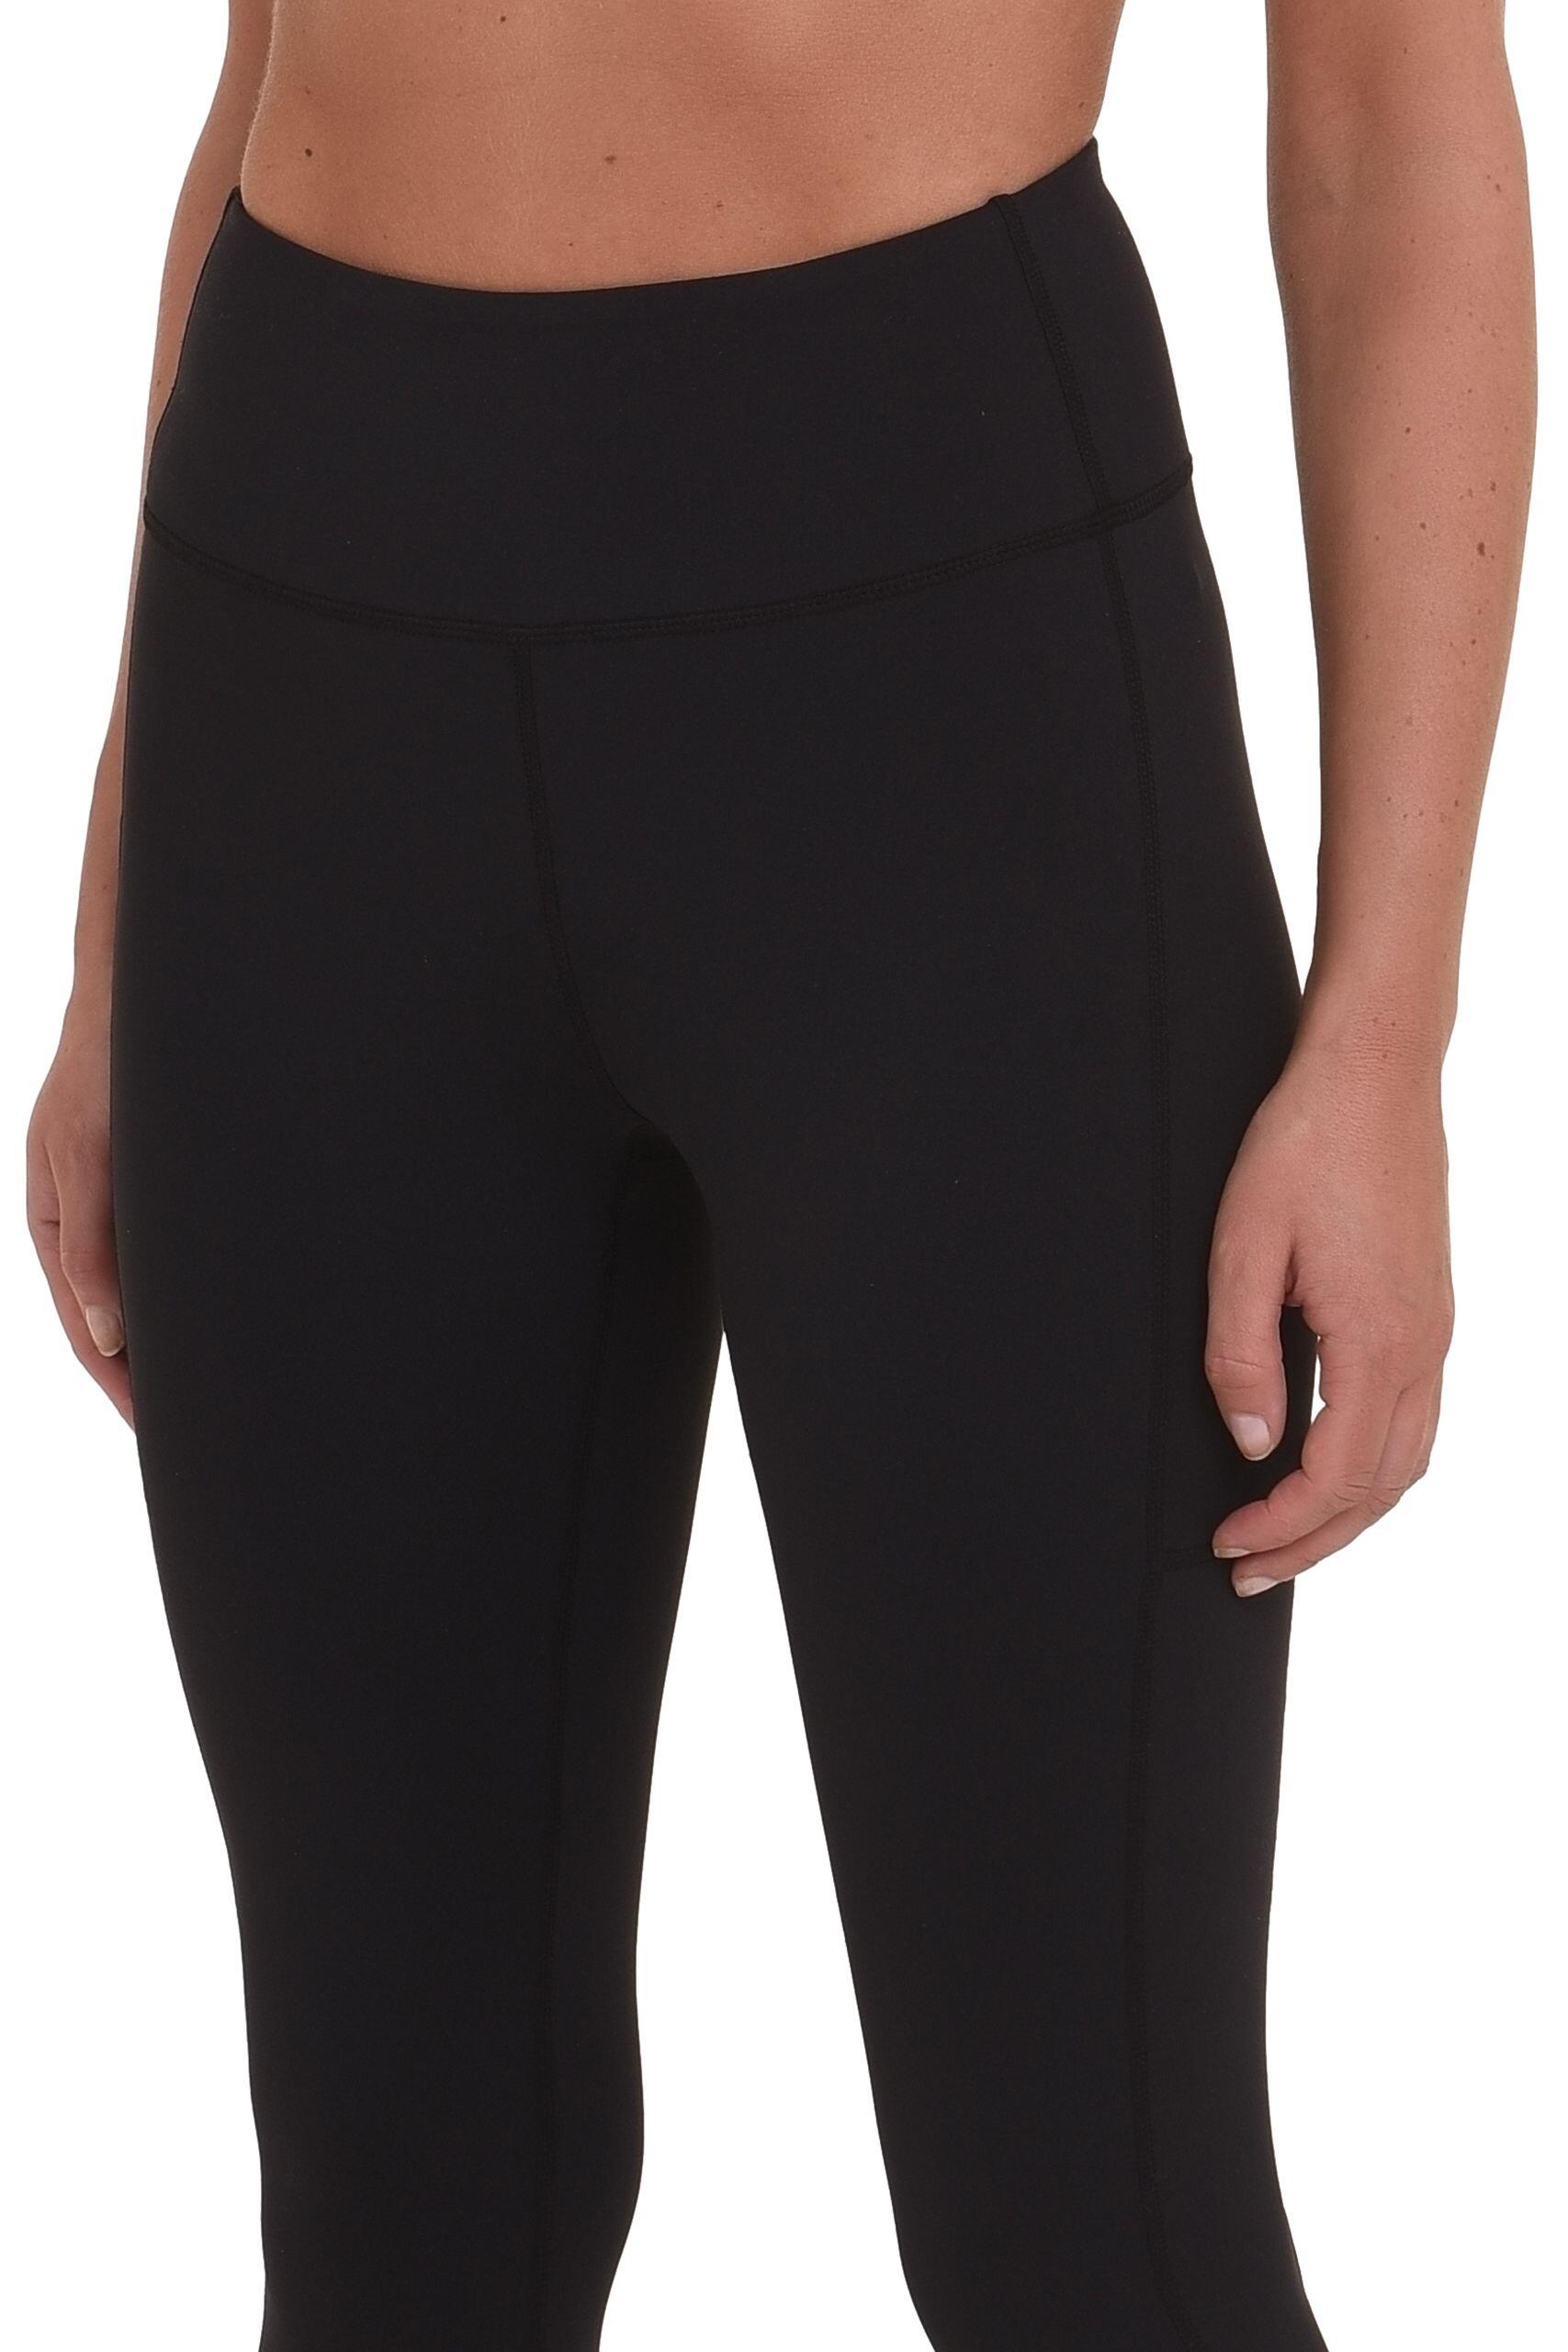 Women's Equilibrium Capri Leggings with Side Pocket - Black 4/5